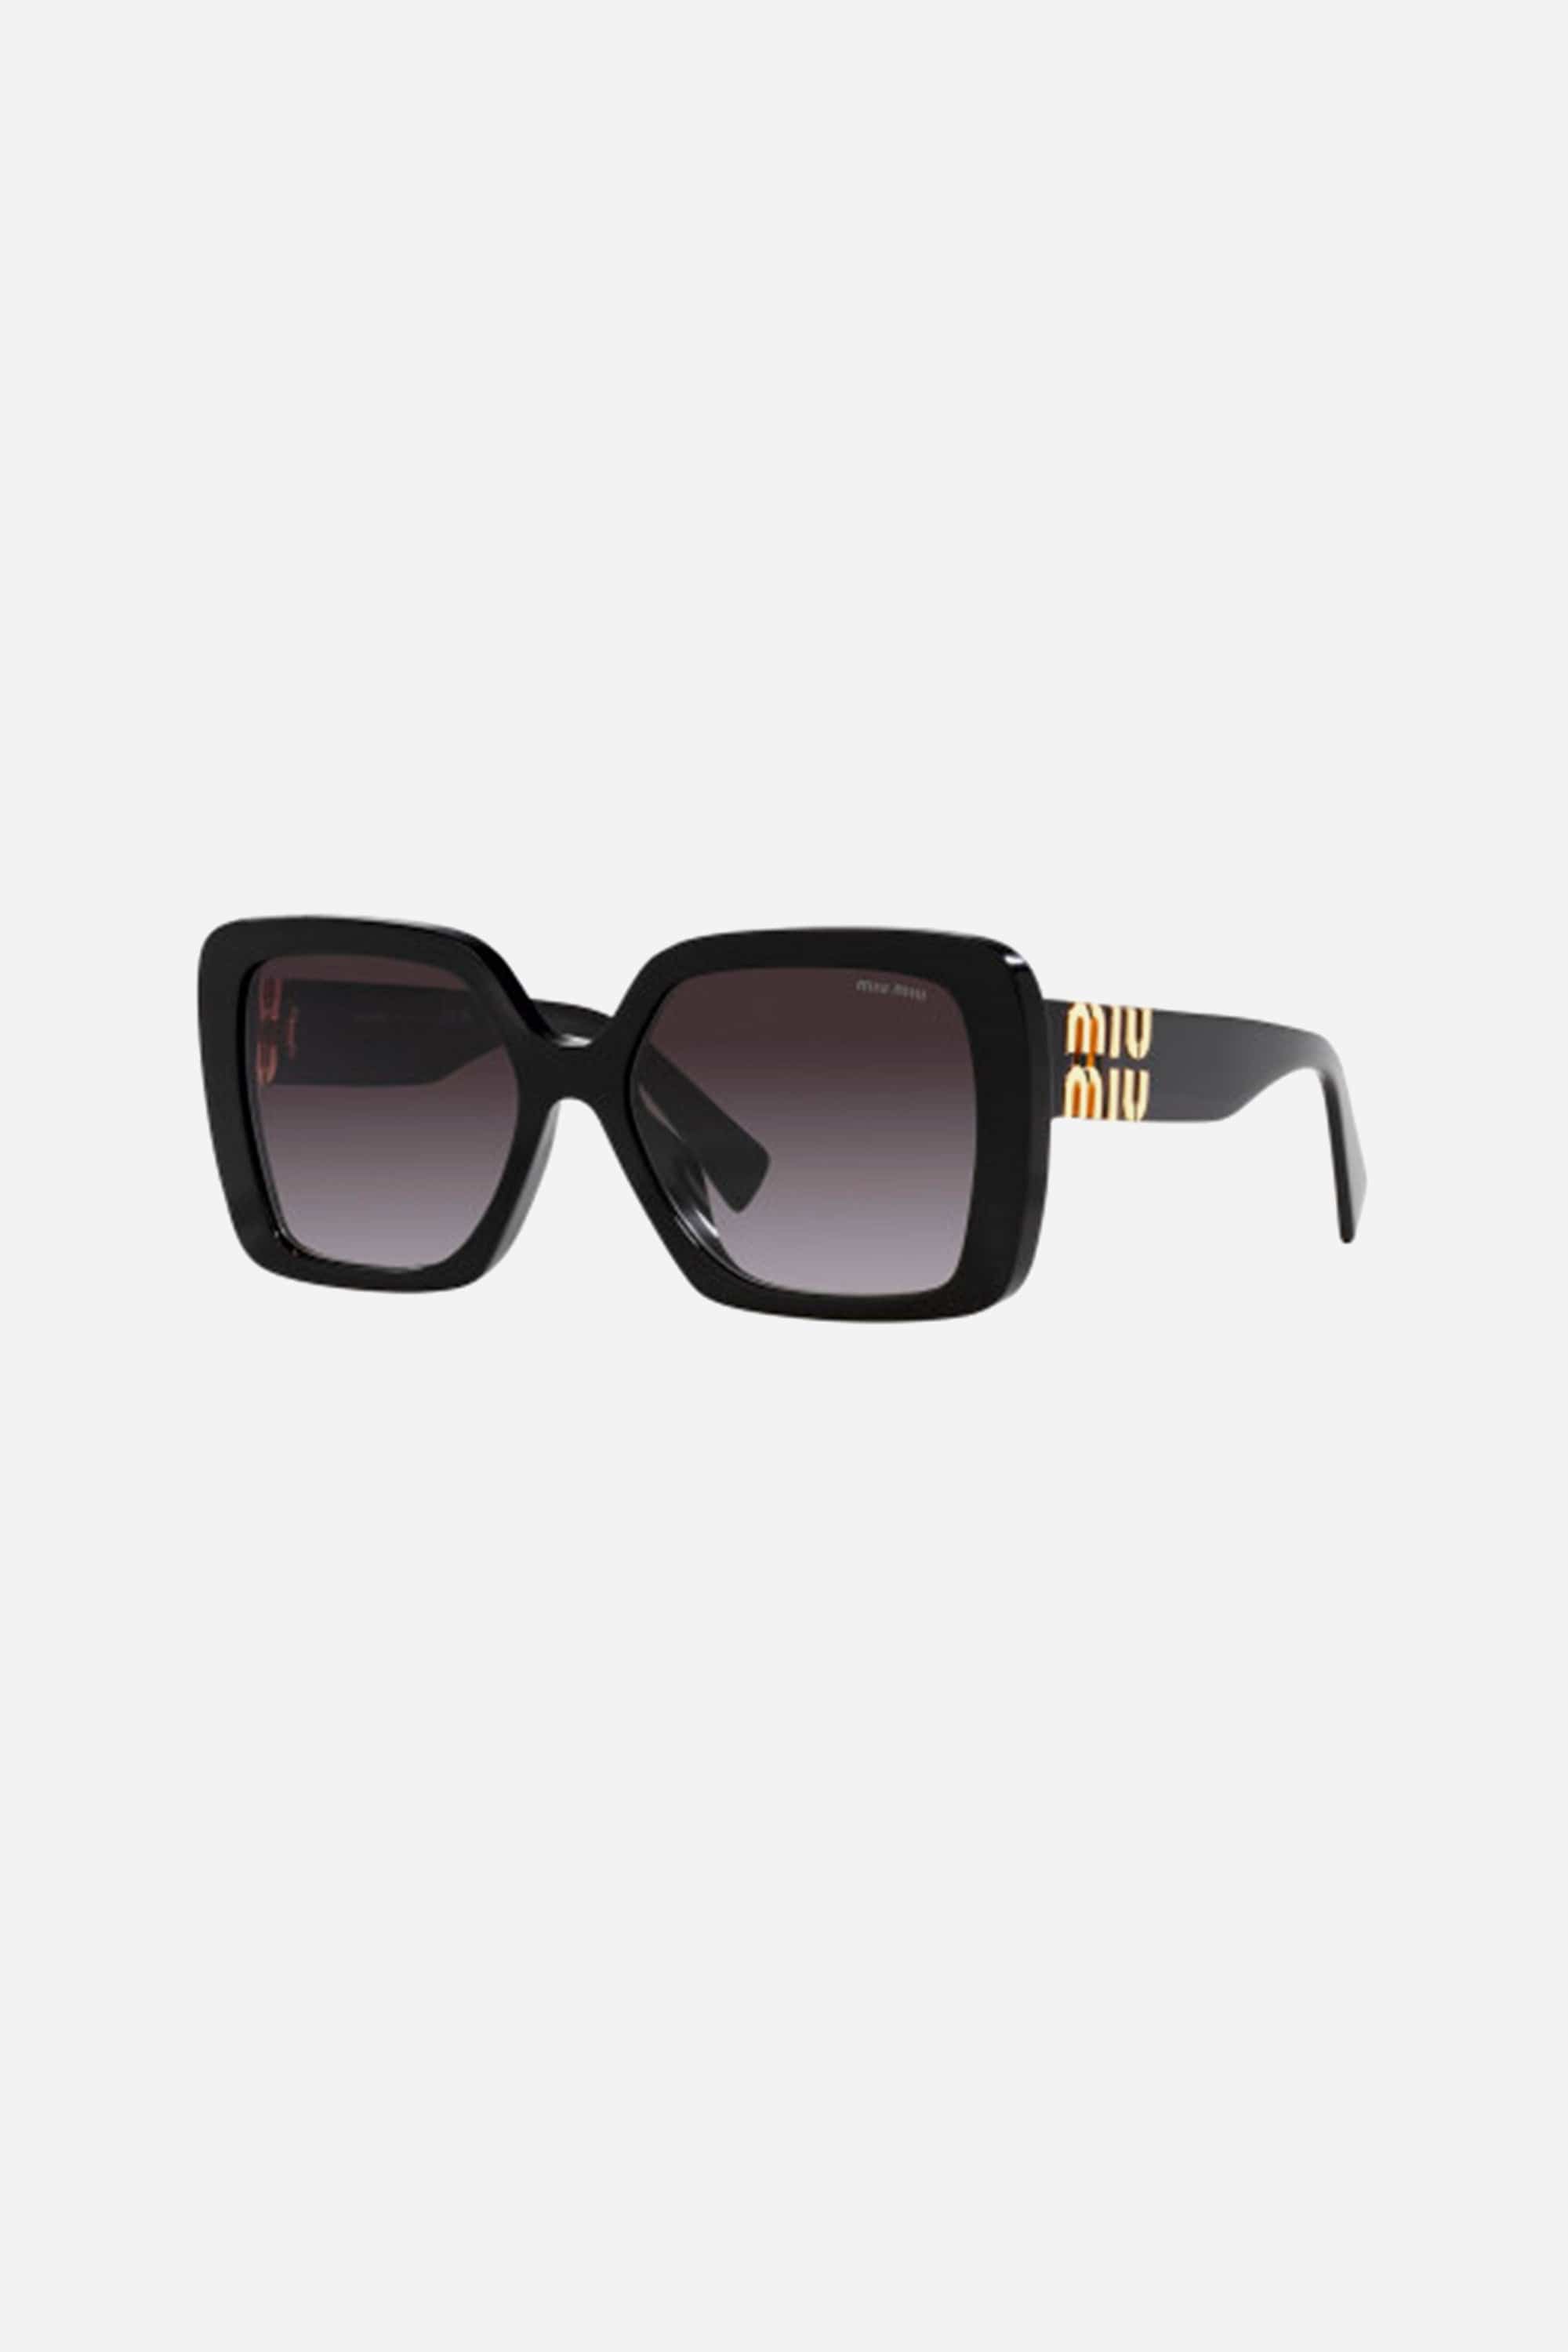 Miu Miu squared black sunglasses - Eyewear Club